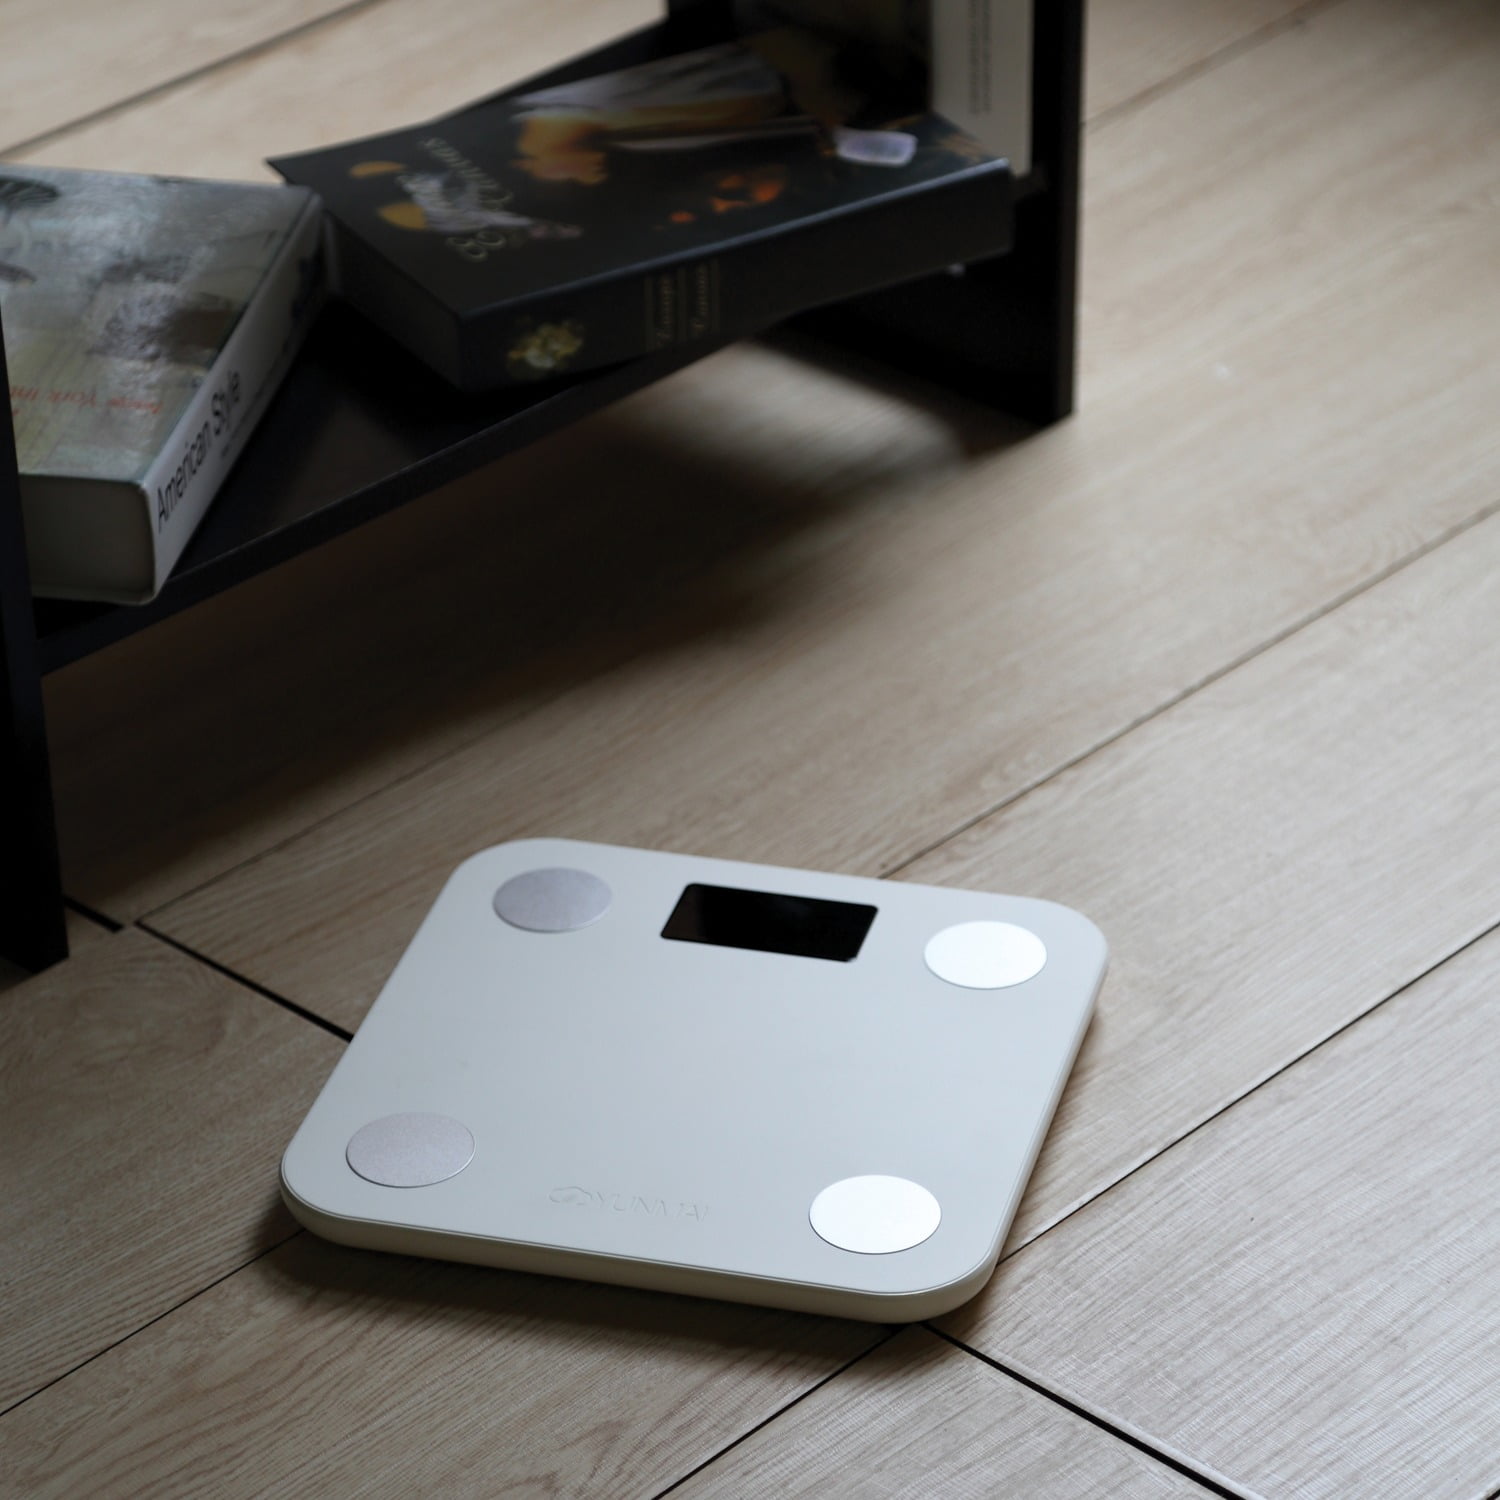 Yunmai Mini Bluetooth Smart Bathroom Scale - White